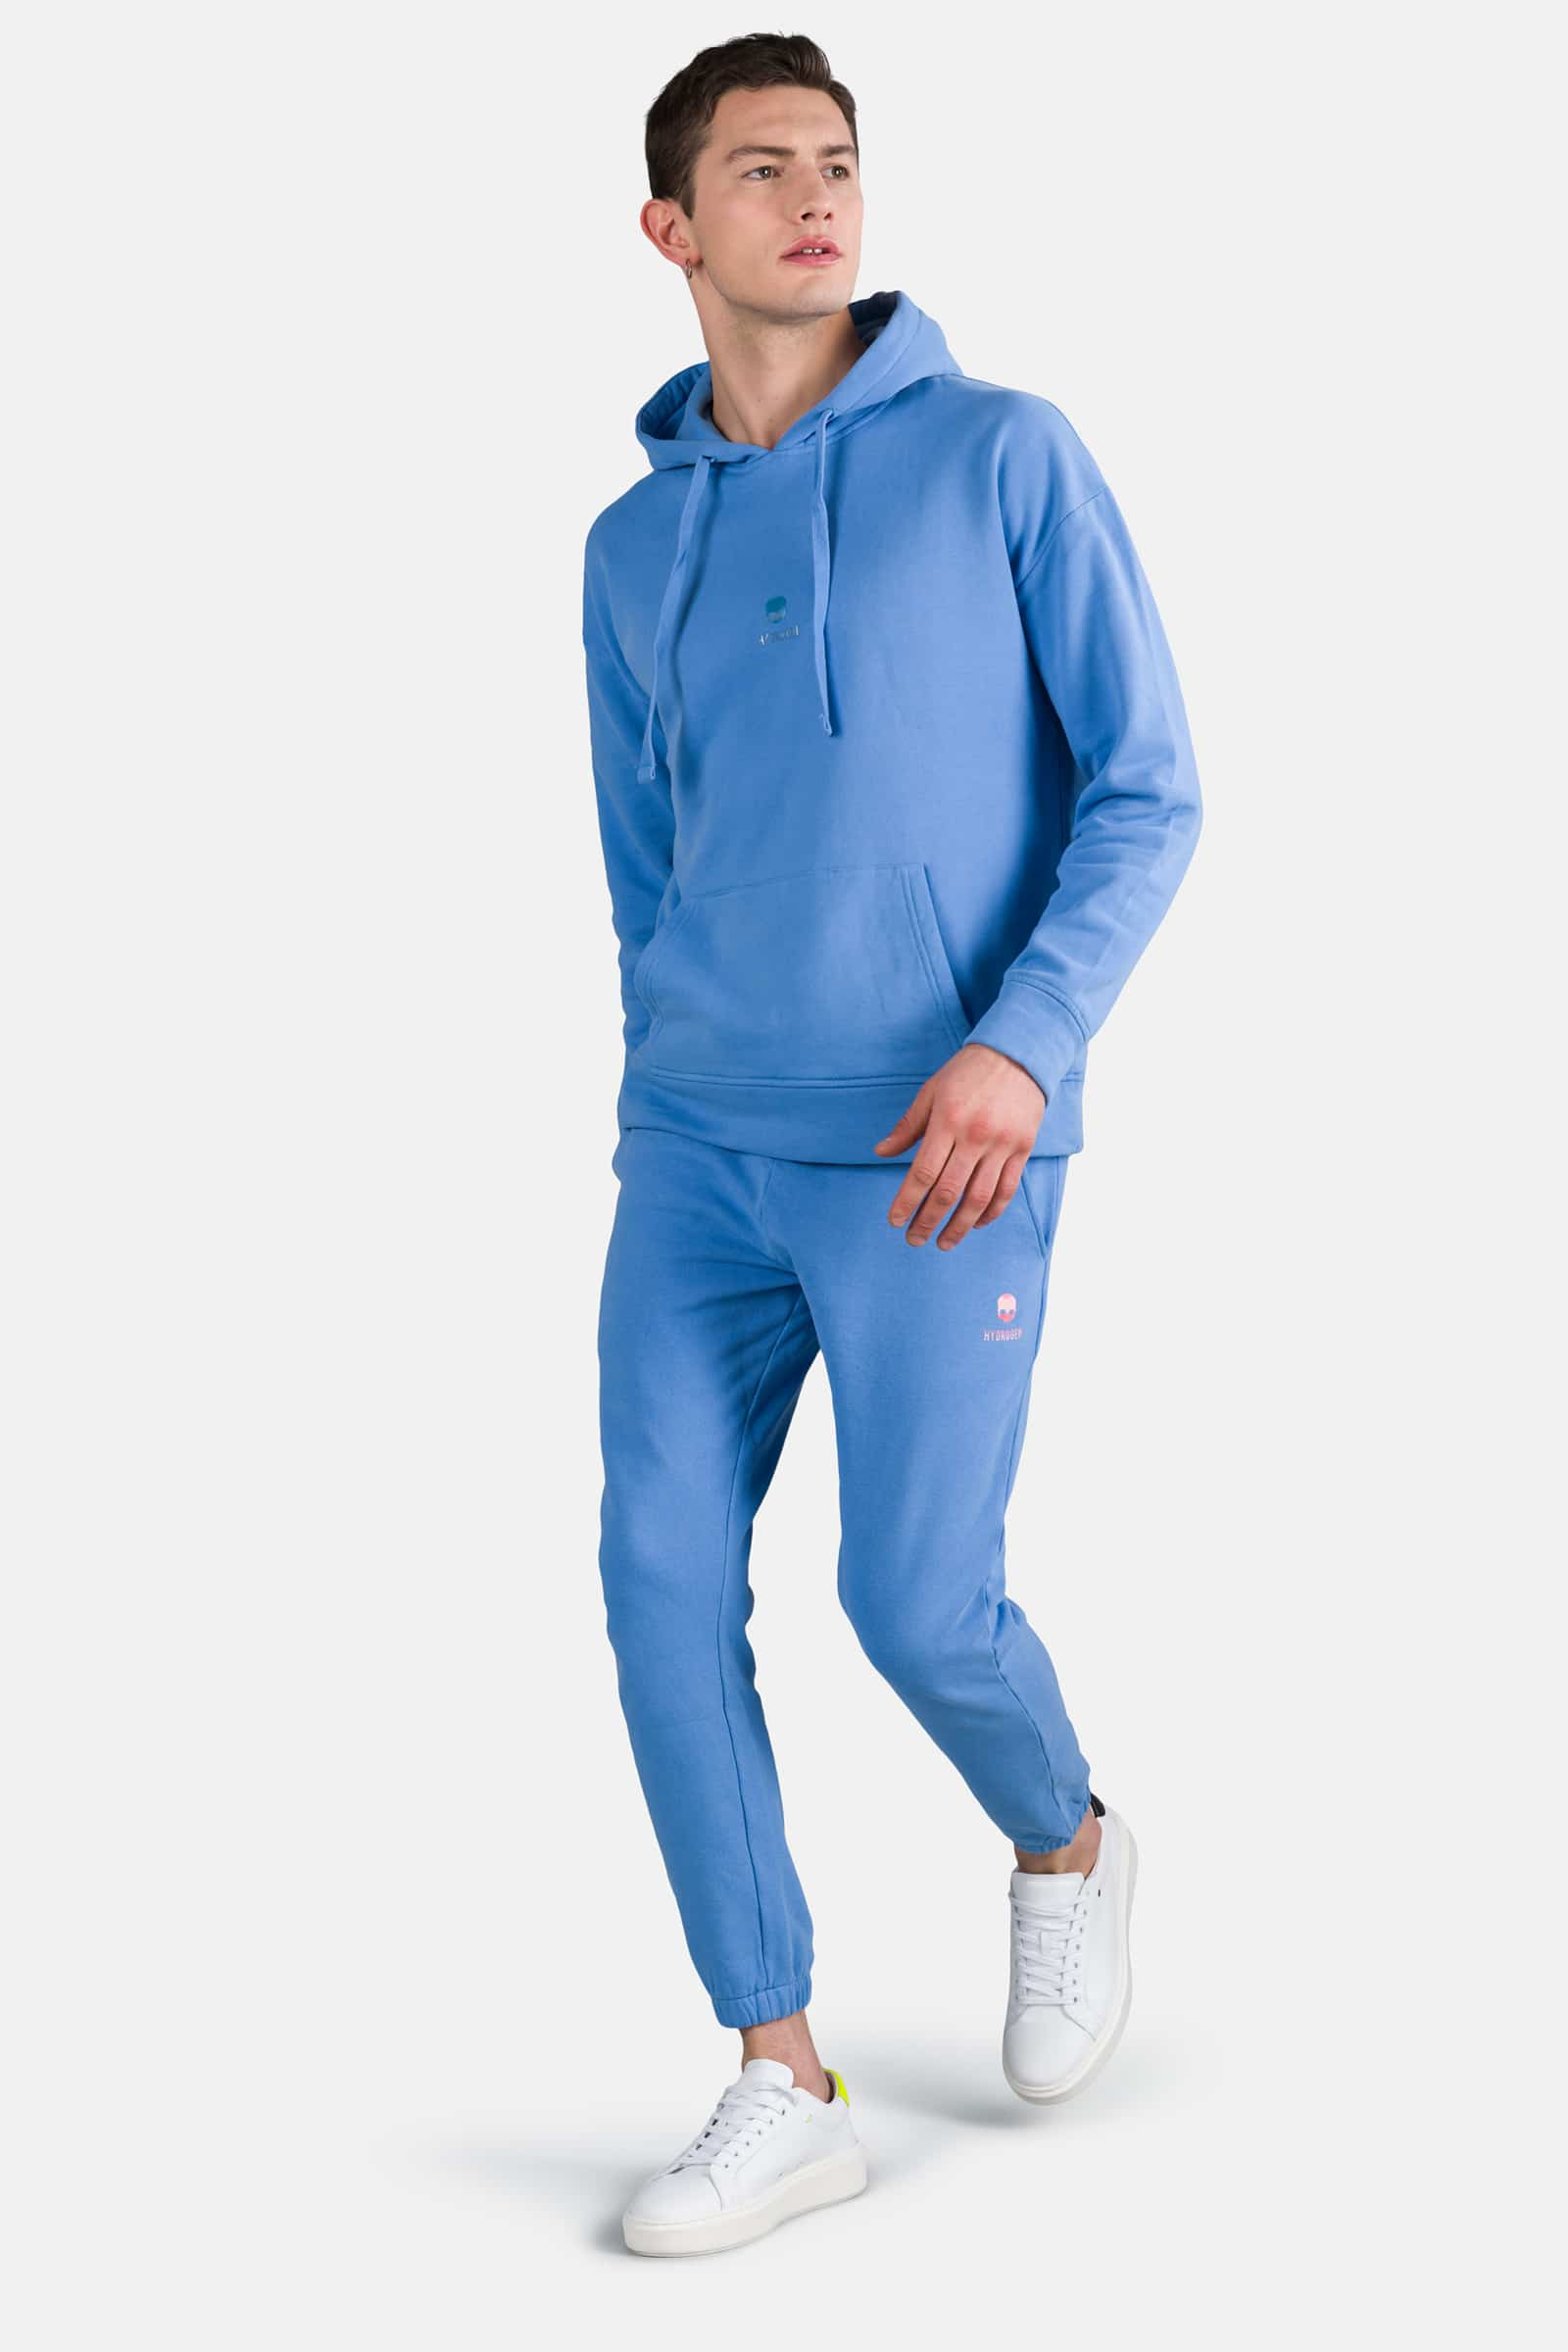 FELPA CAPPUCCIO CON TESCHIO - SKY BLUE - Abbigliamento sportivo | Hydrogen